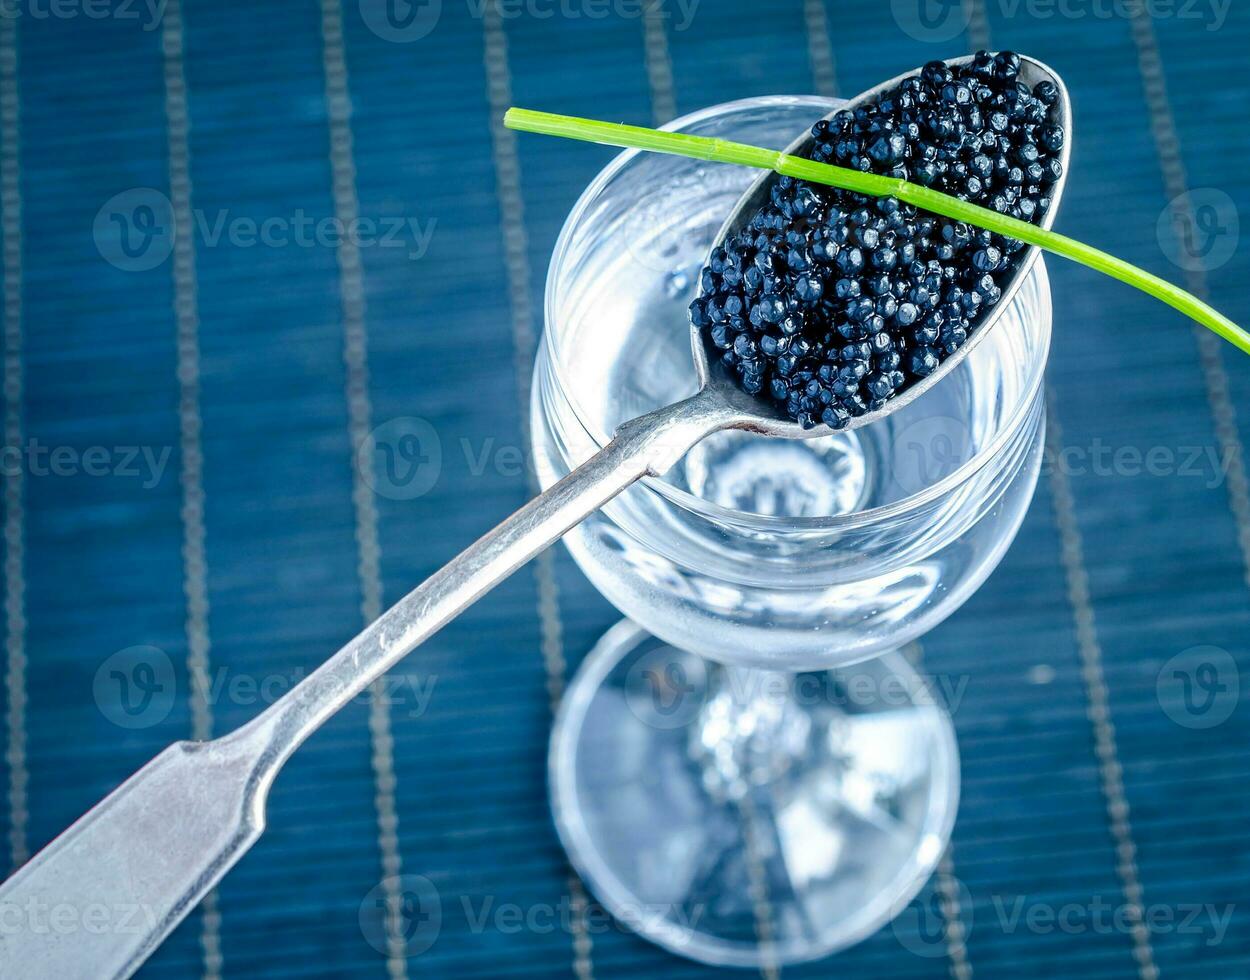 svart kaviar sked foto